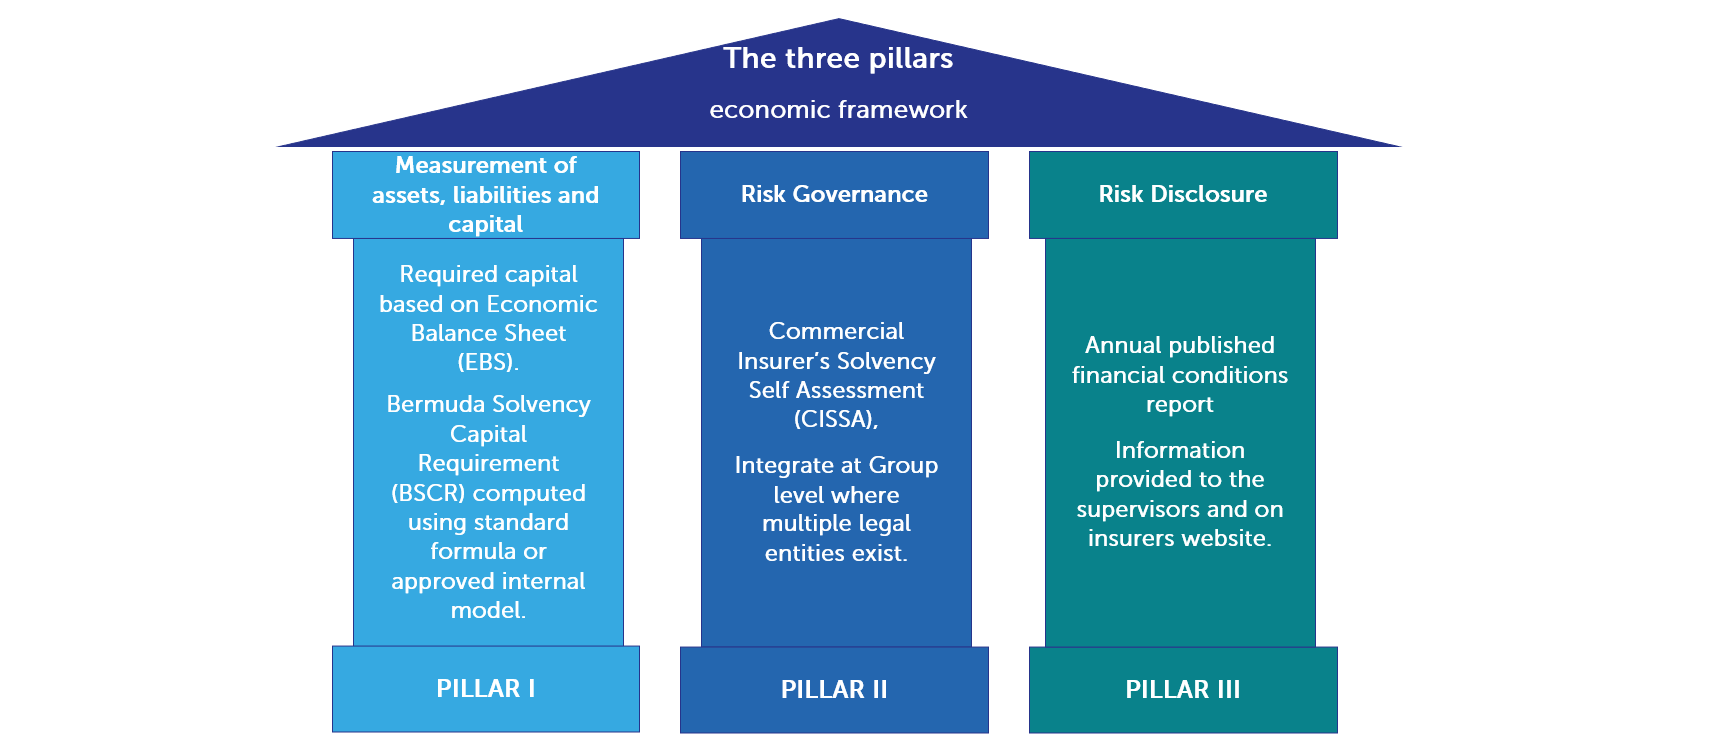 BMA: 3 pillars - economic framework